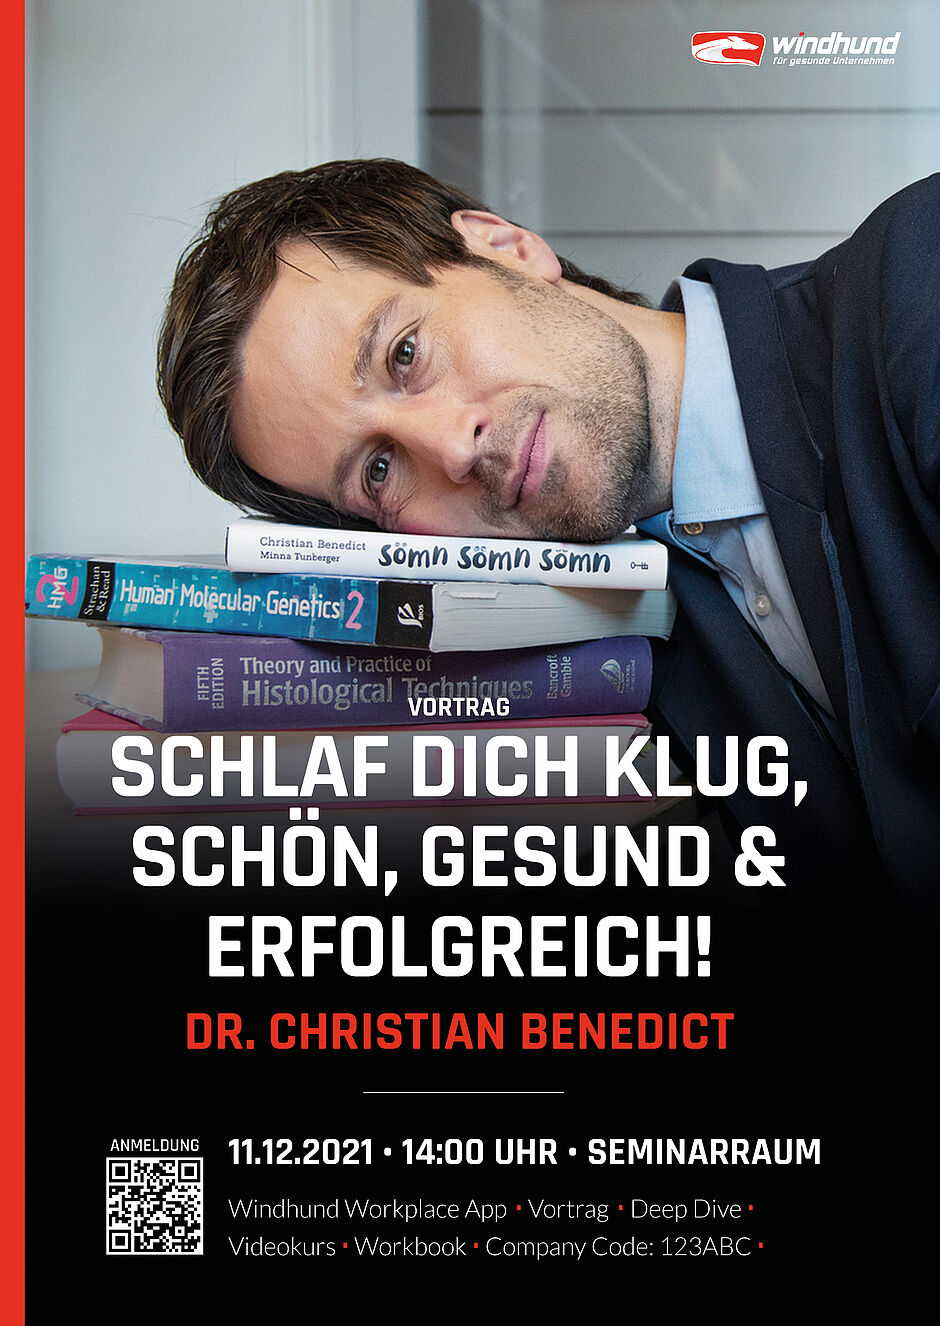 Windhund Expertenprofil Dr. Christian Benedict